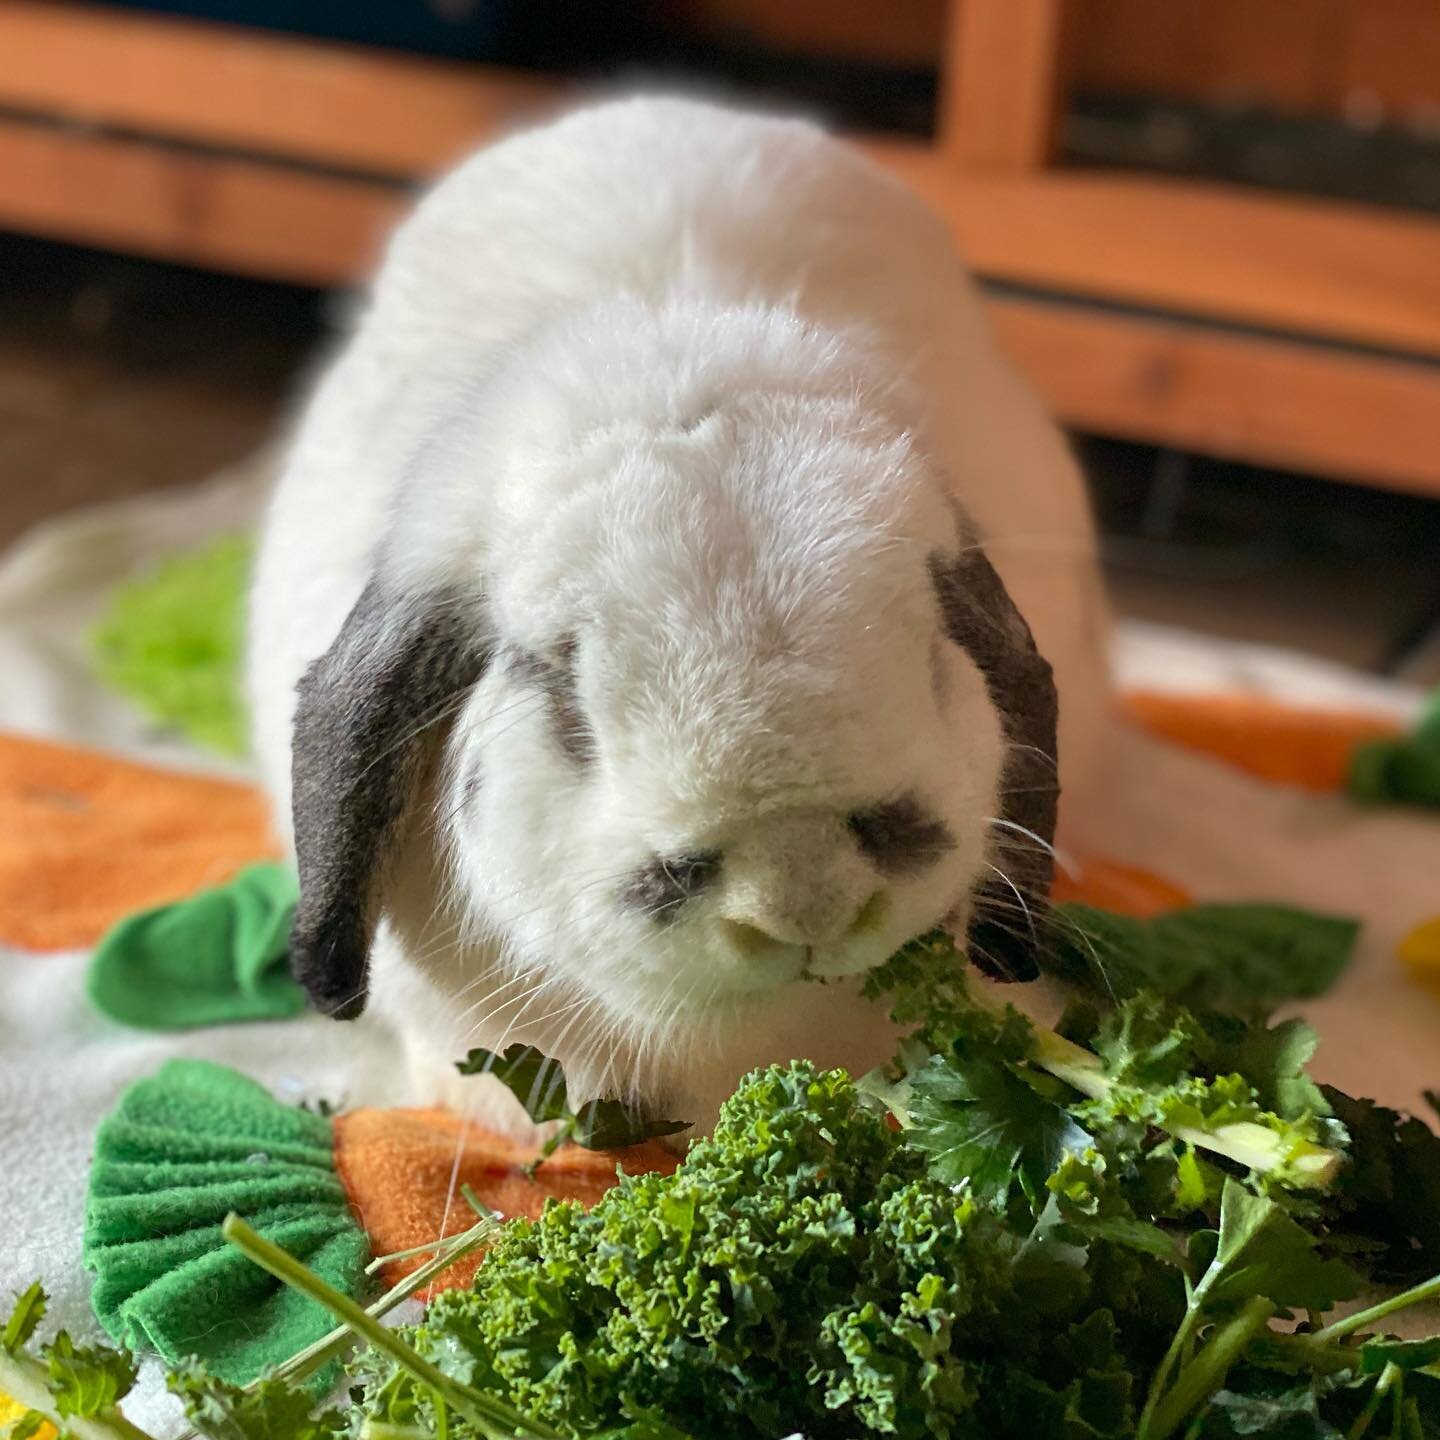 Banjo loves his kale and carrot treats! #lopbunny #chesterspringspa #downingtownpetsitter #westvincentpa #weatherstone #renewglenmoore #rabbitcare